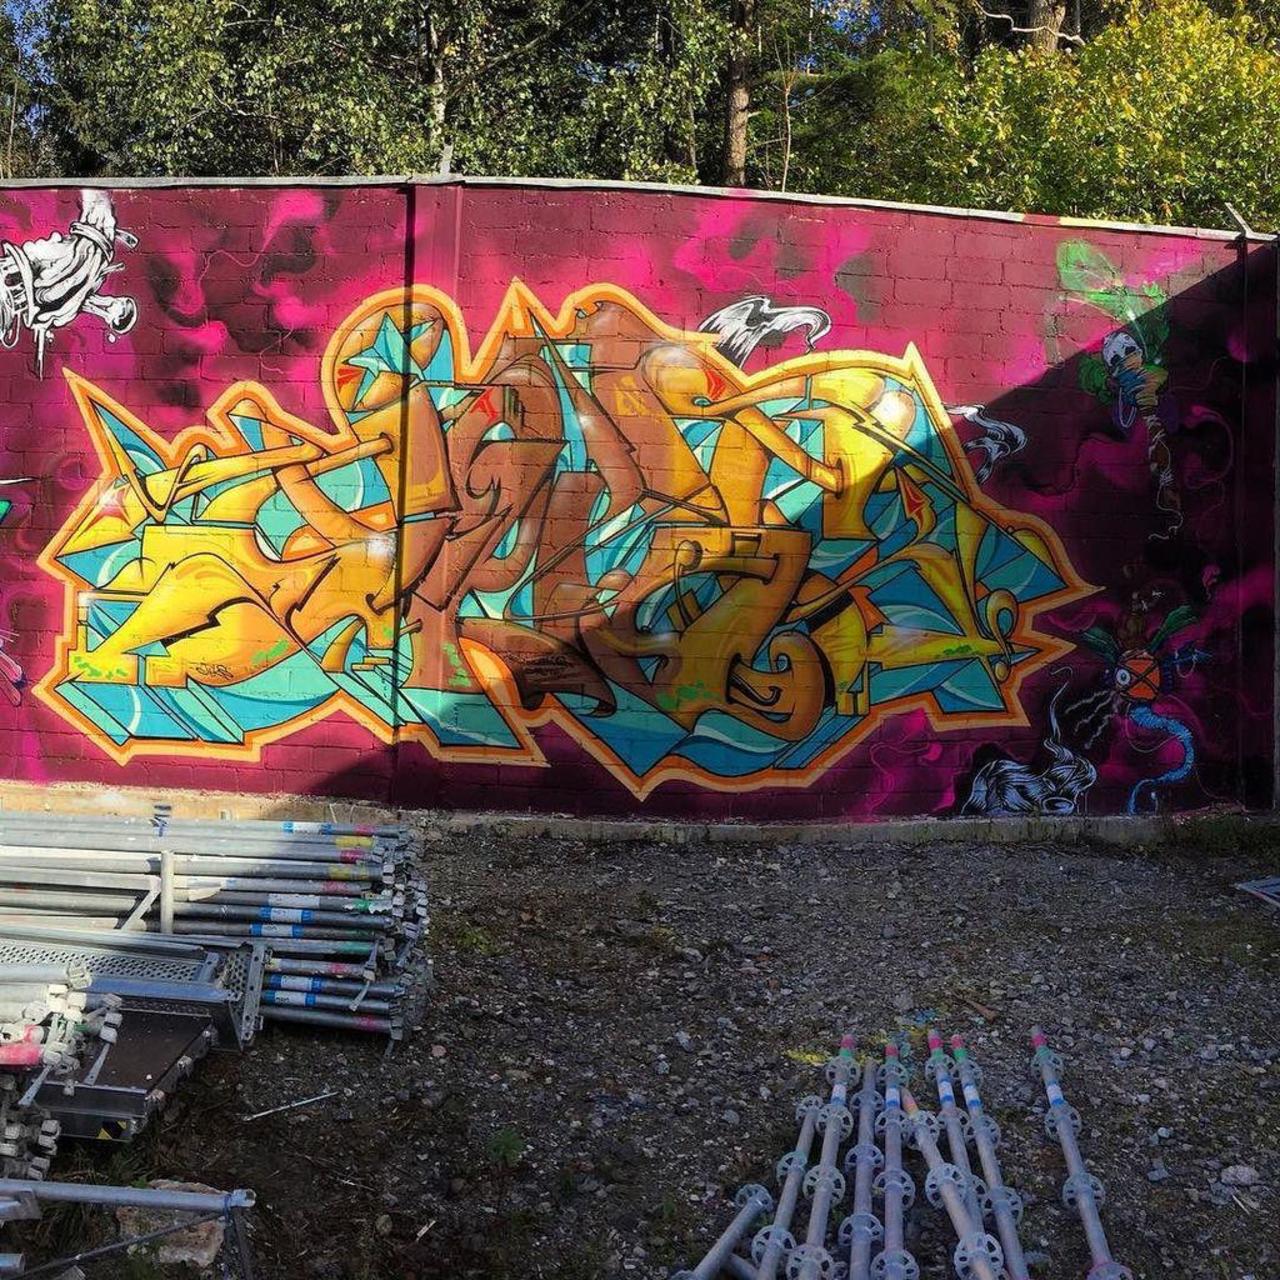 Work by #jeks. #stockholm #snösätra #graffiti #graffitistockholm #streetart #streetartstockholm #gatukonst #gatukon… http://t.co/amzRqRAfcg